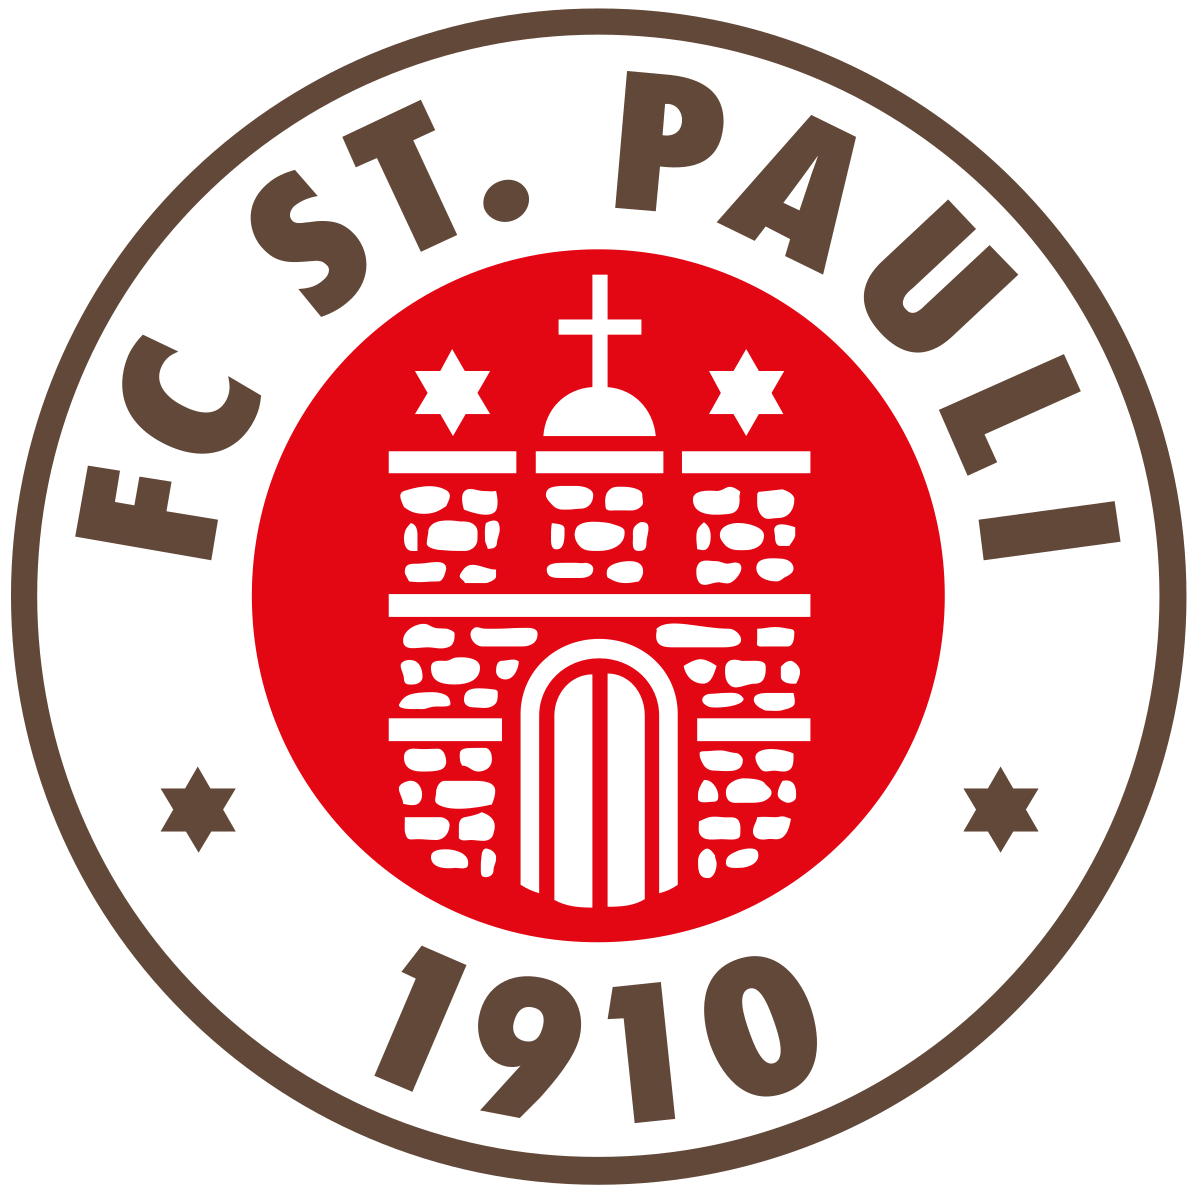 FC St. Pauli - Wikipedia